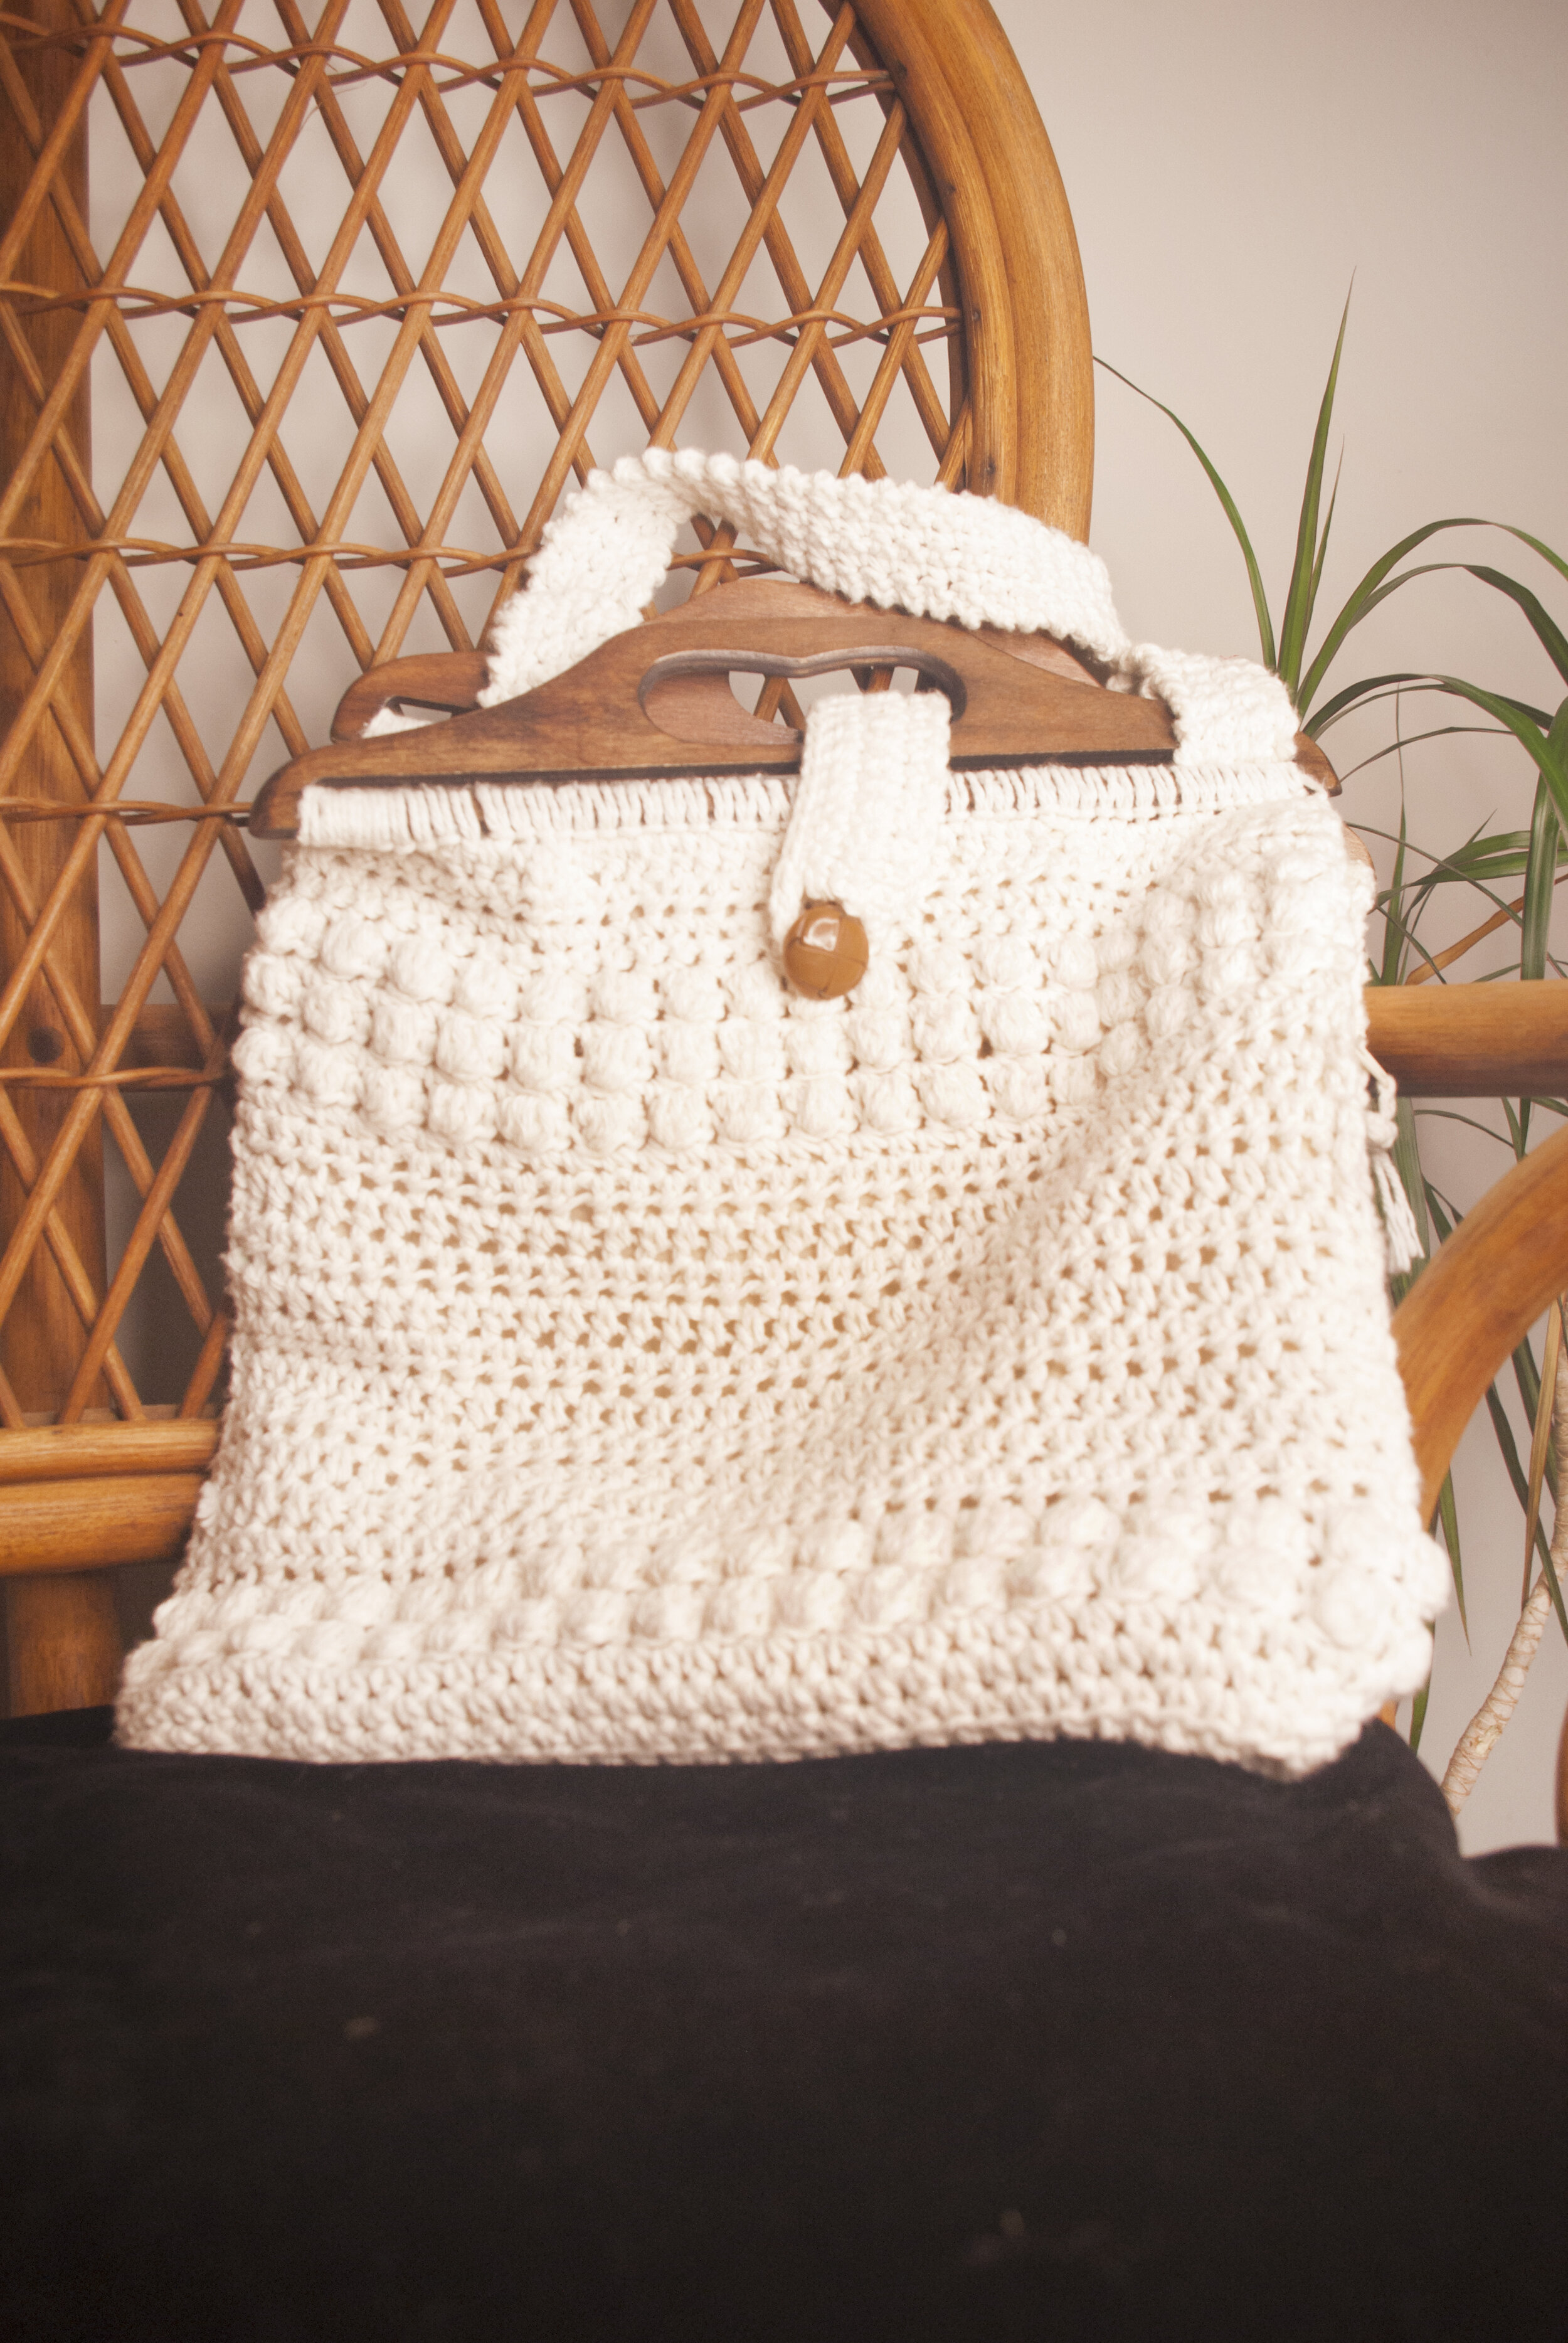 Craft Books: #7107 Purse Strings Vol. 2 Macrame Handbag Patterns | eBay